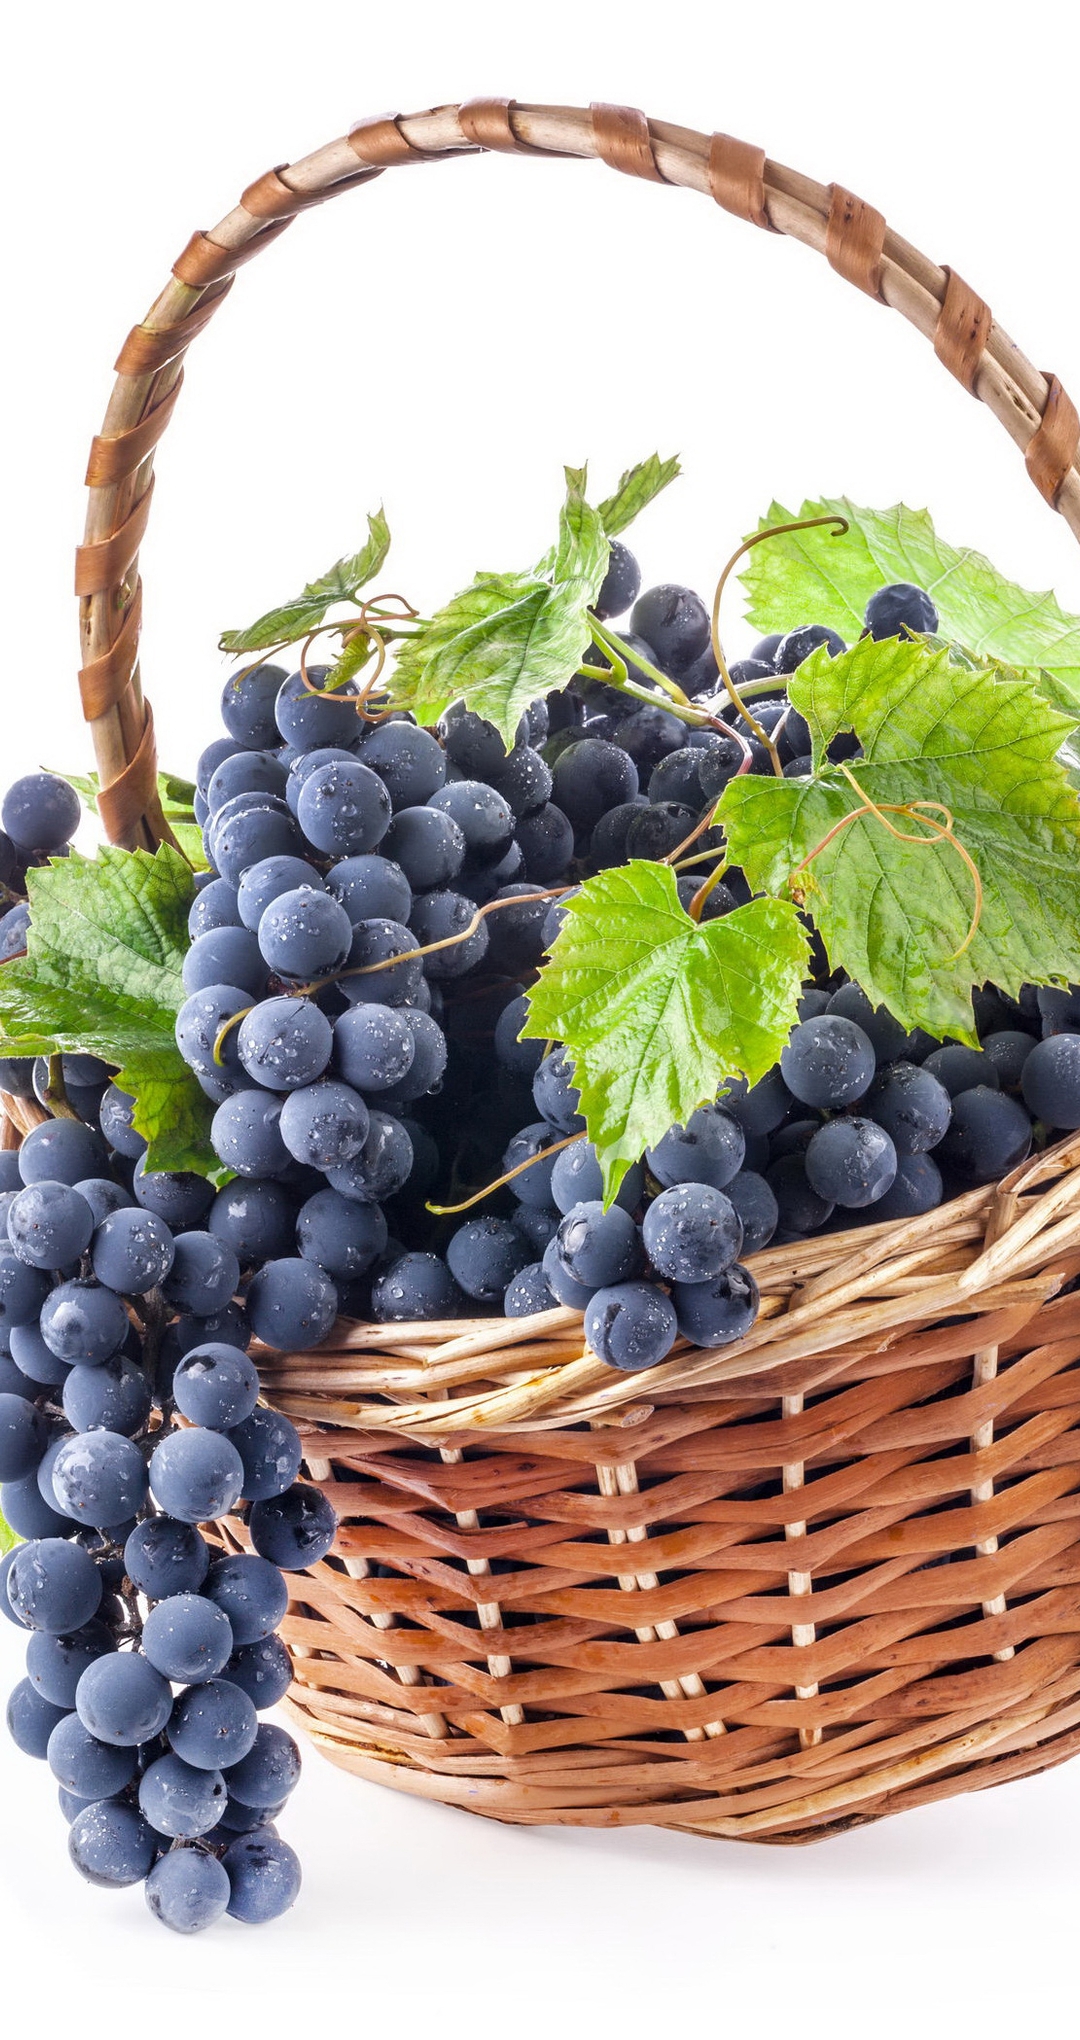 Image: Grape, vine, grapes, leaves, basket, white background